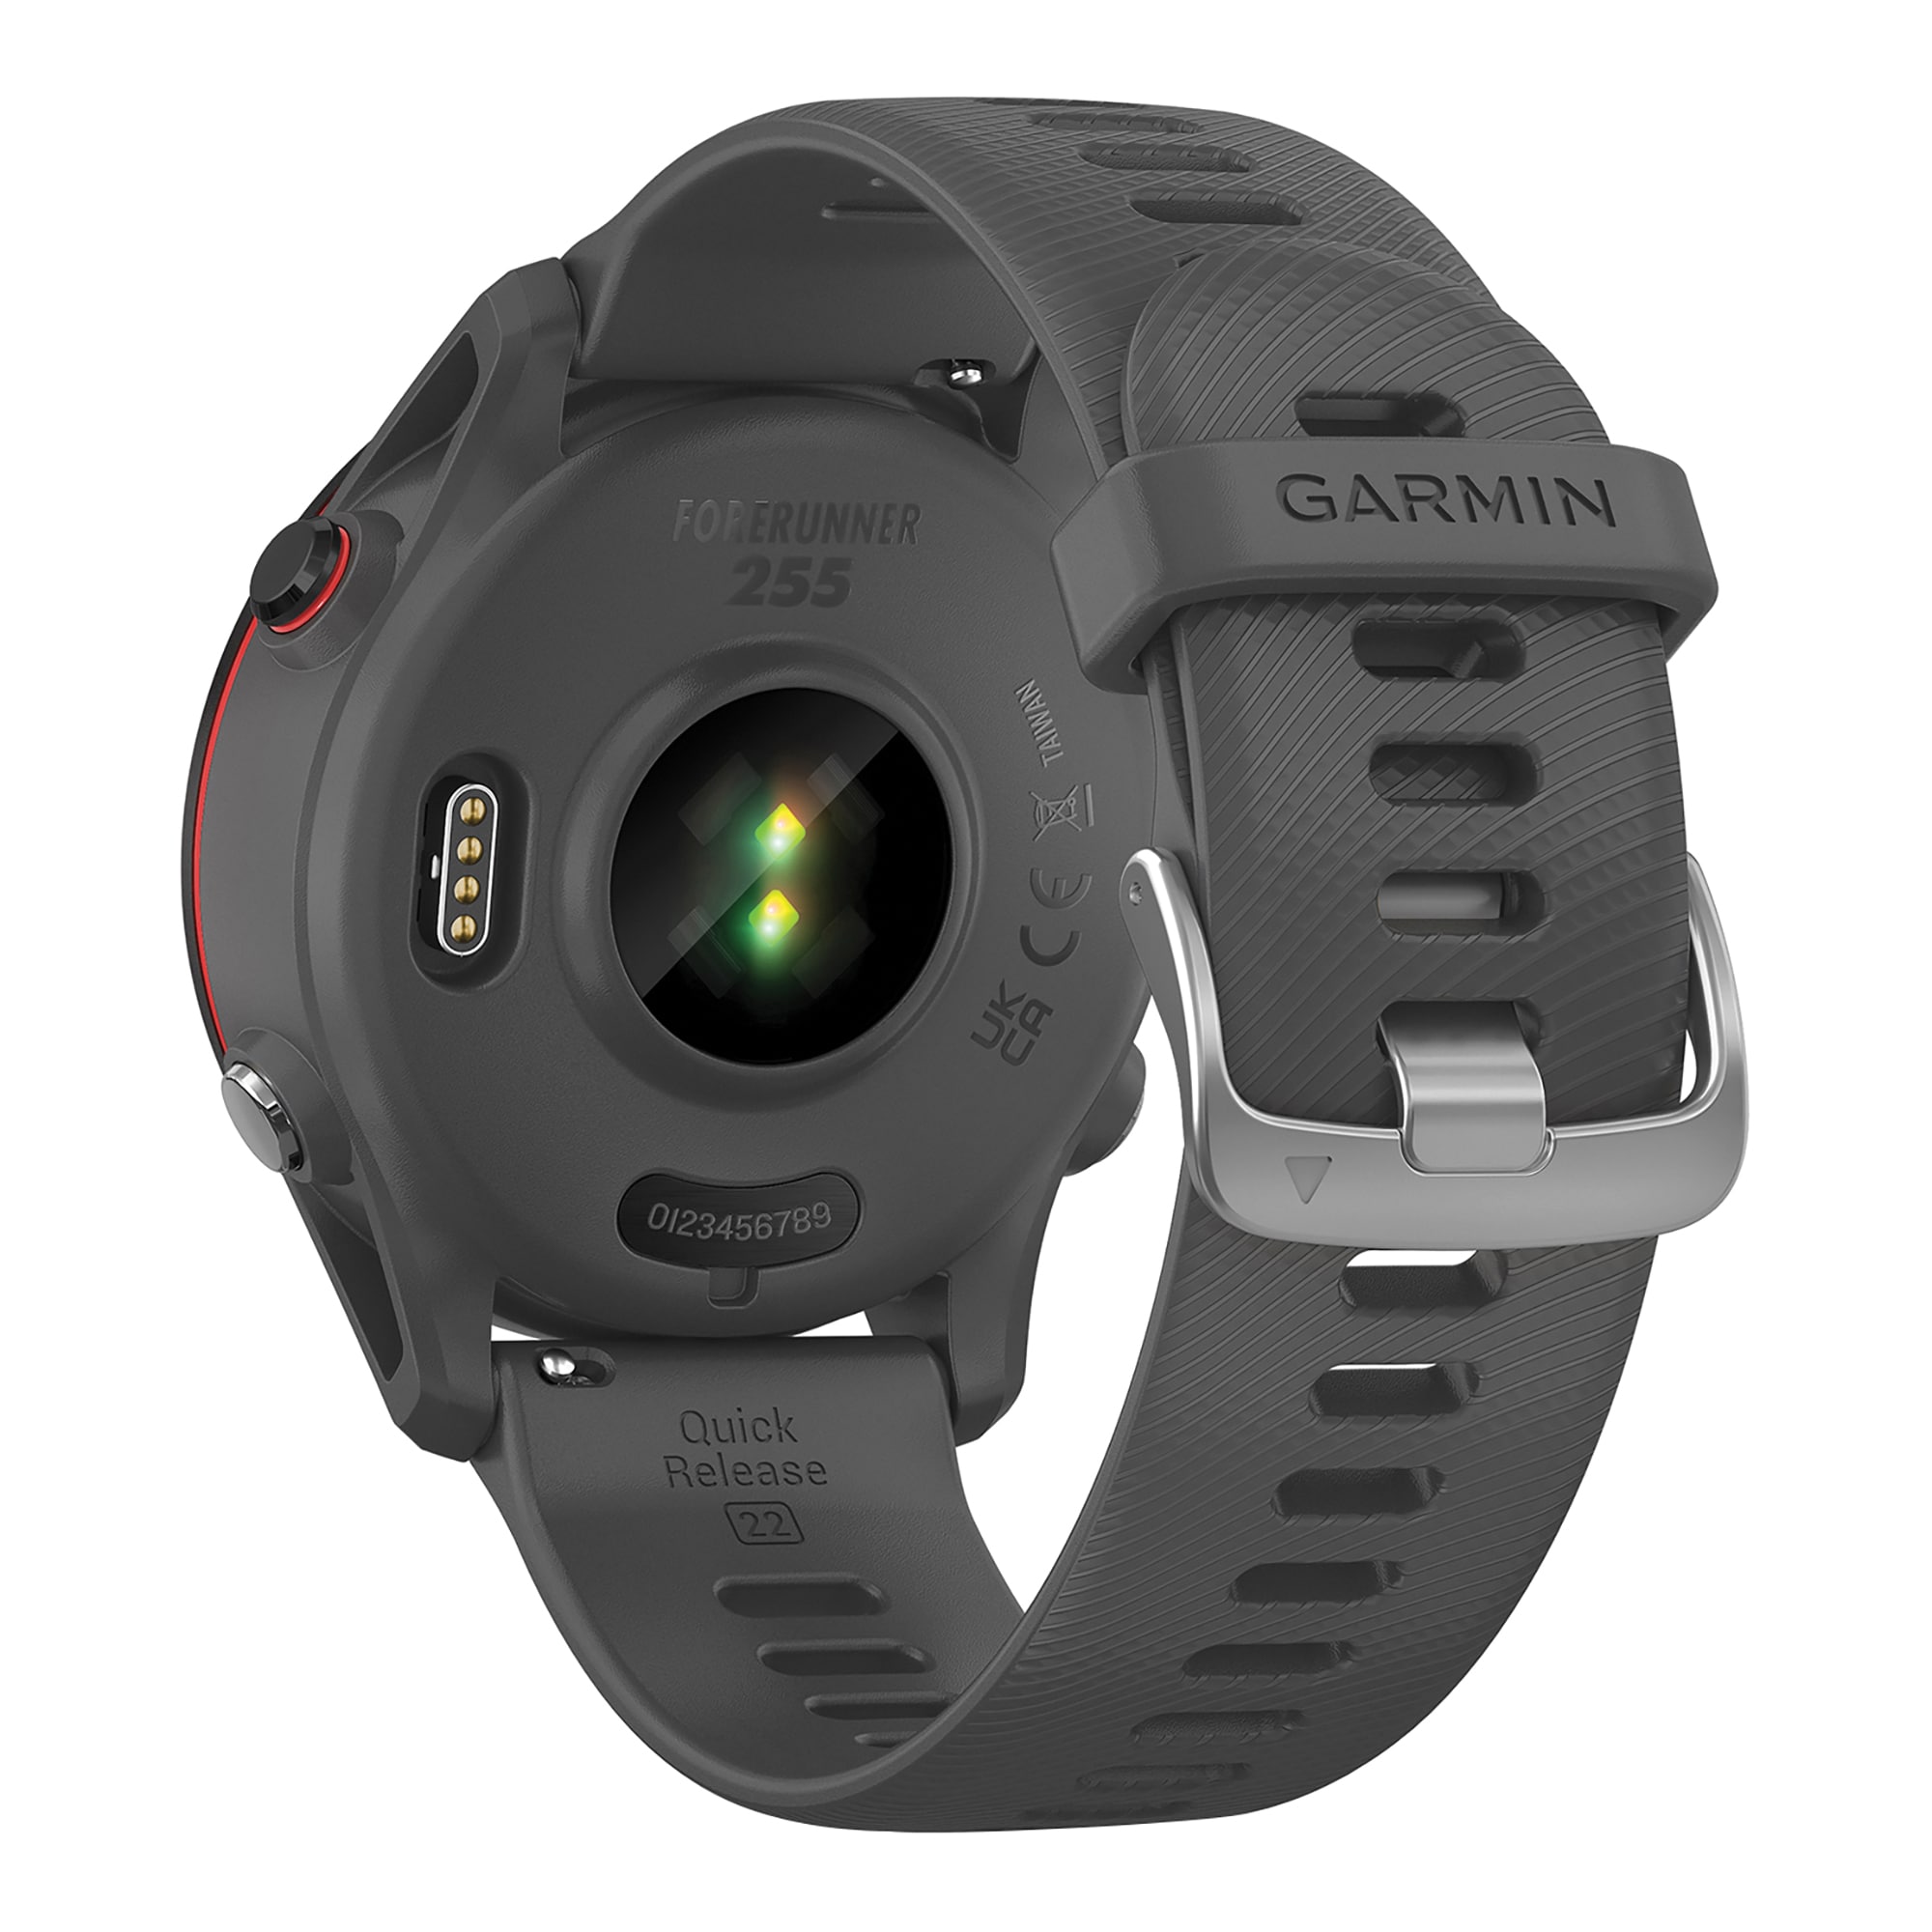 Garmin Forerunner 255 Running Smartwatch (Slate Gray) in the 